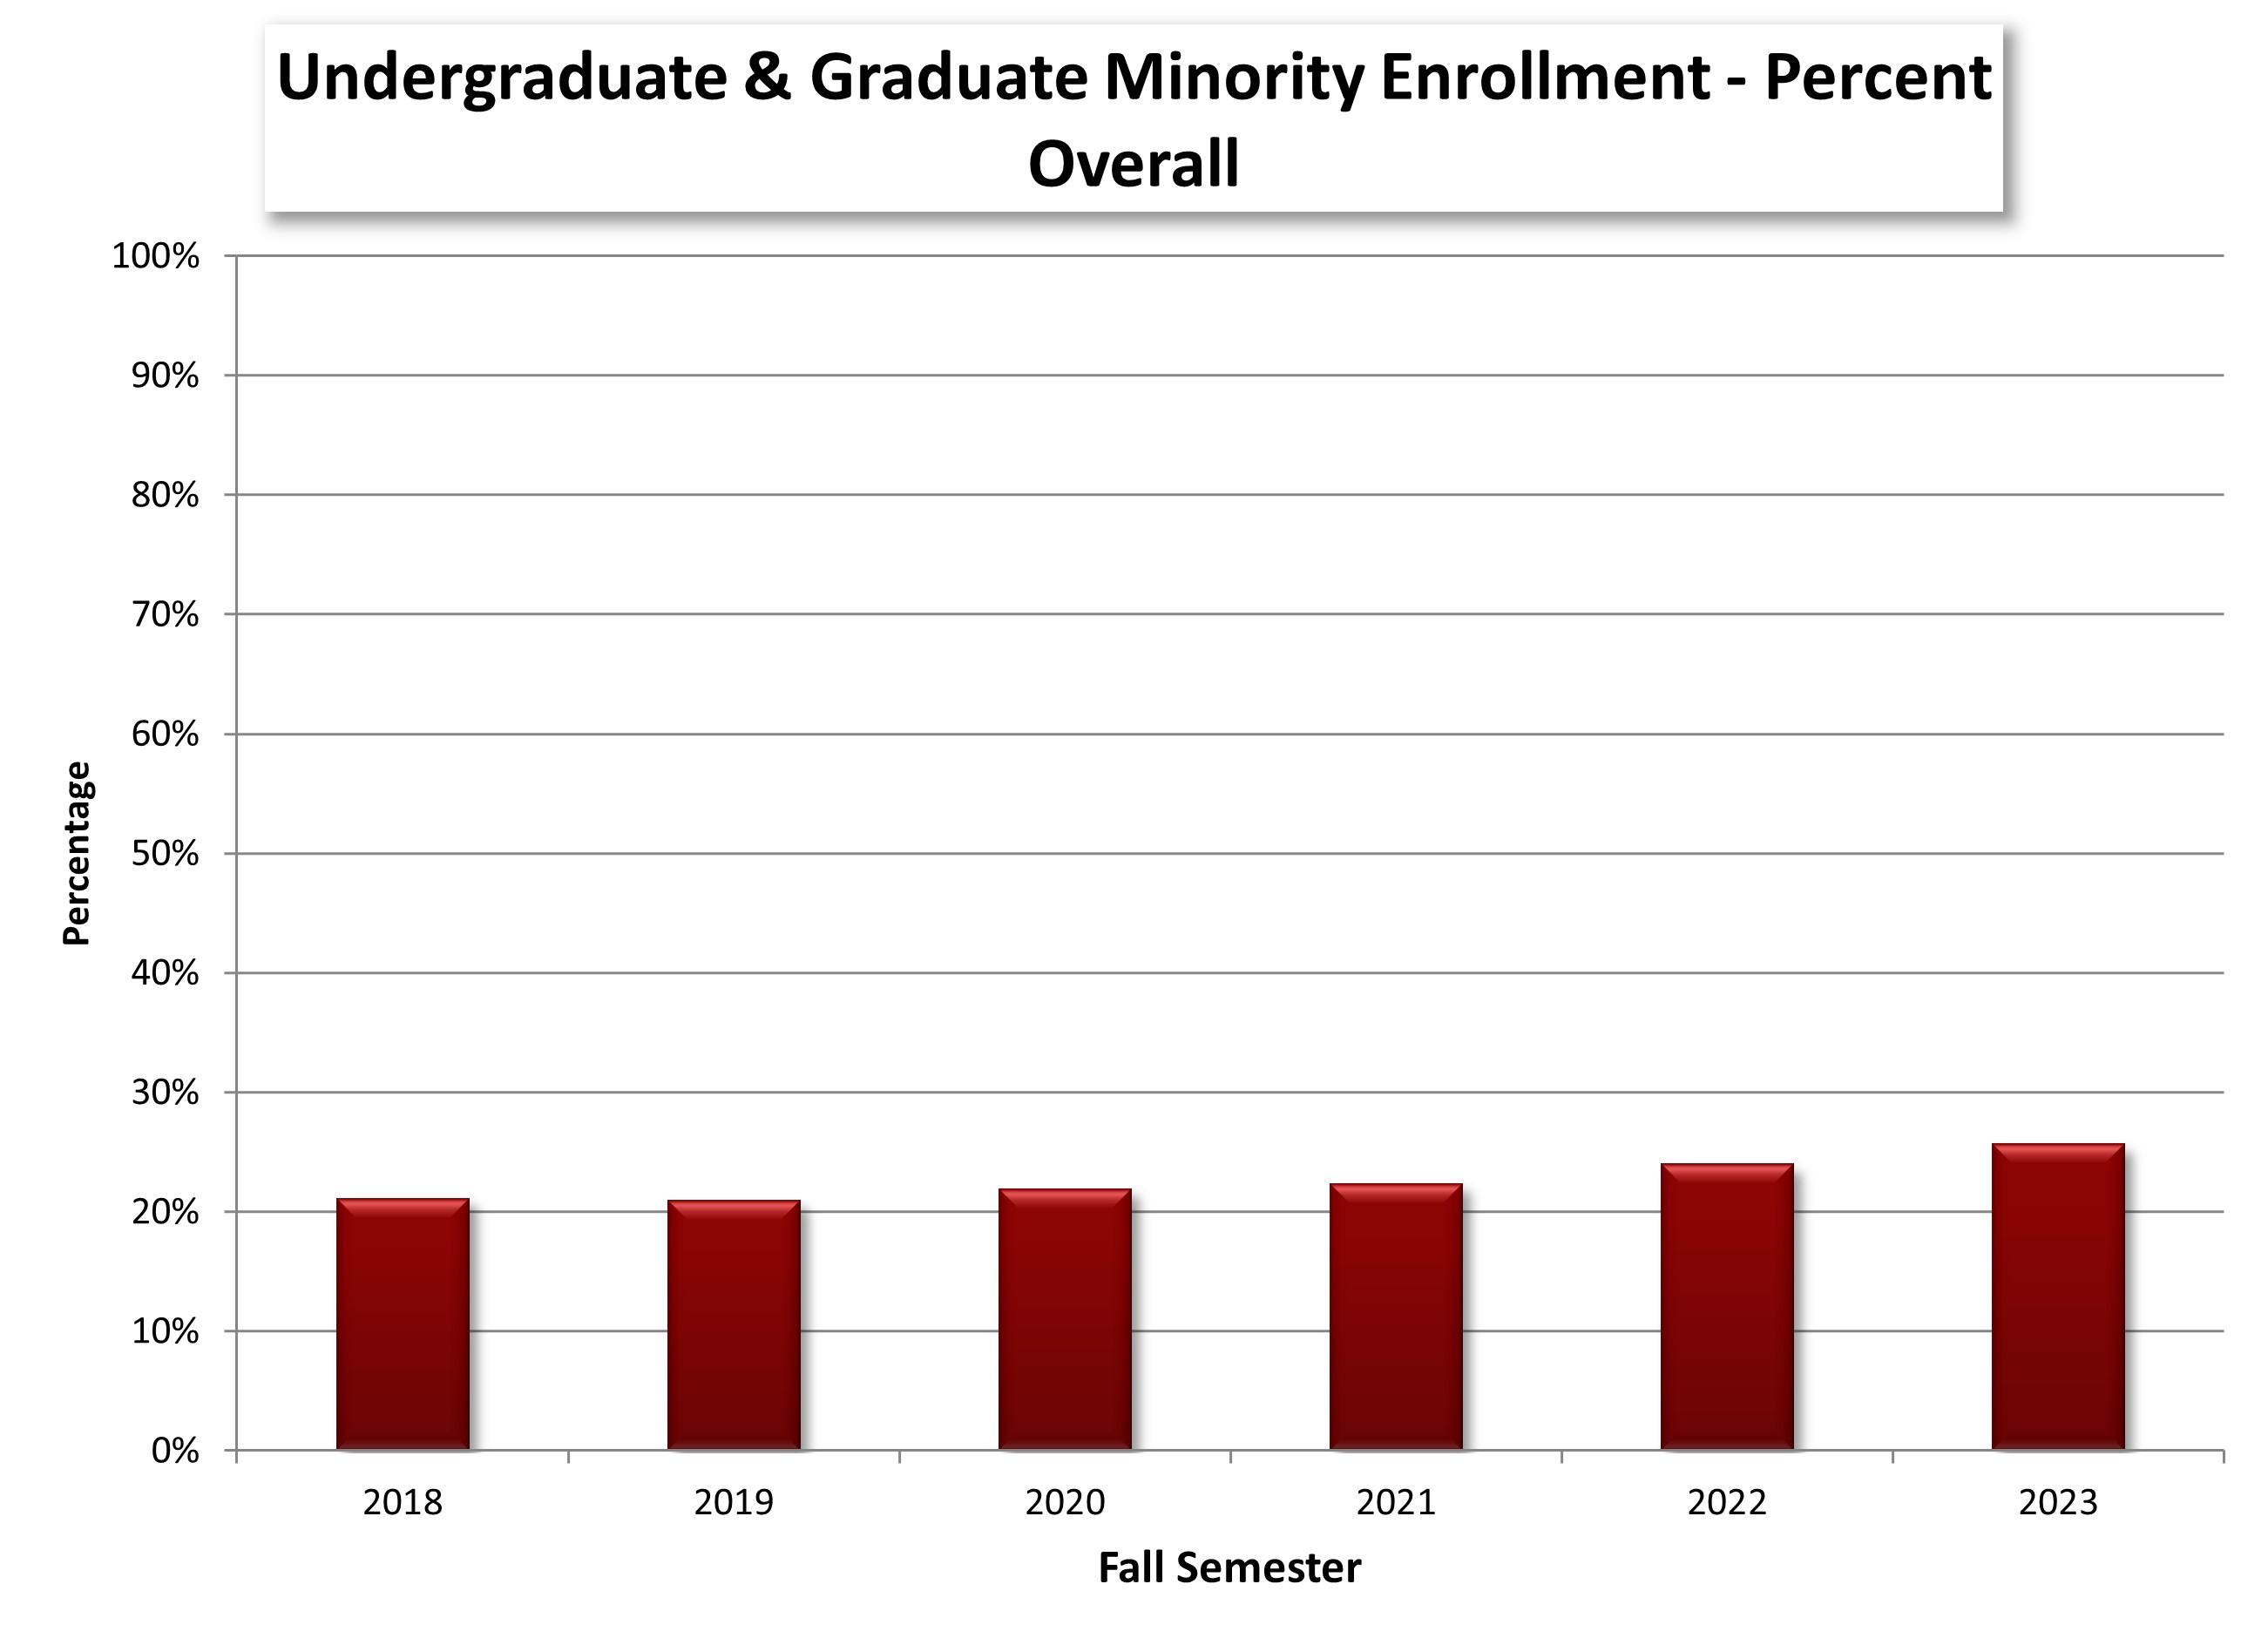 Minority Enrollment - Percentage Overall chart